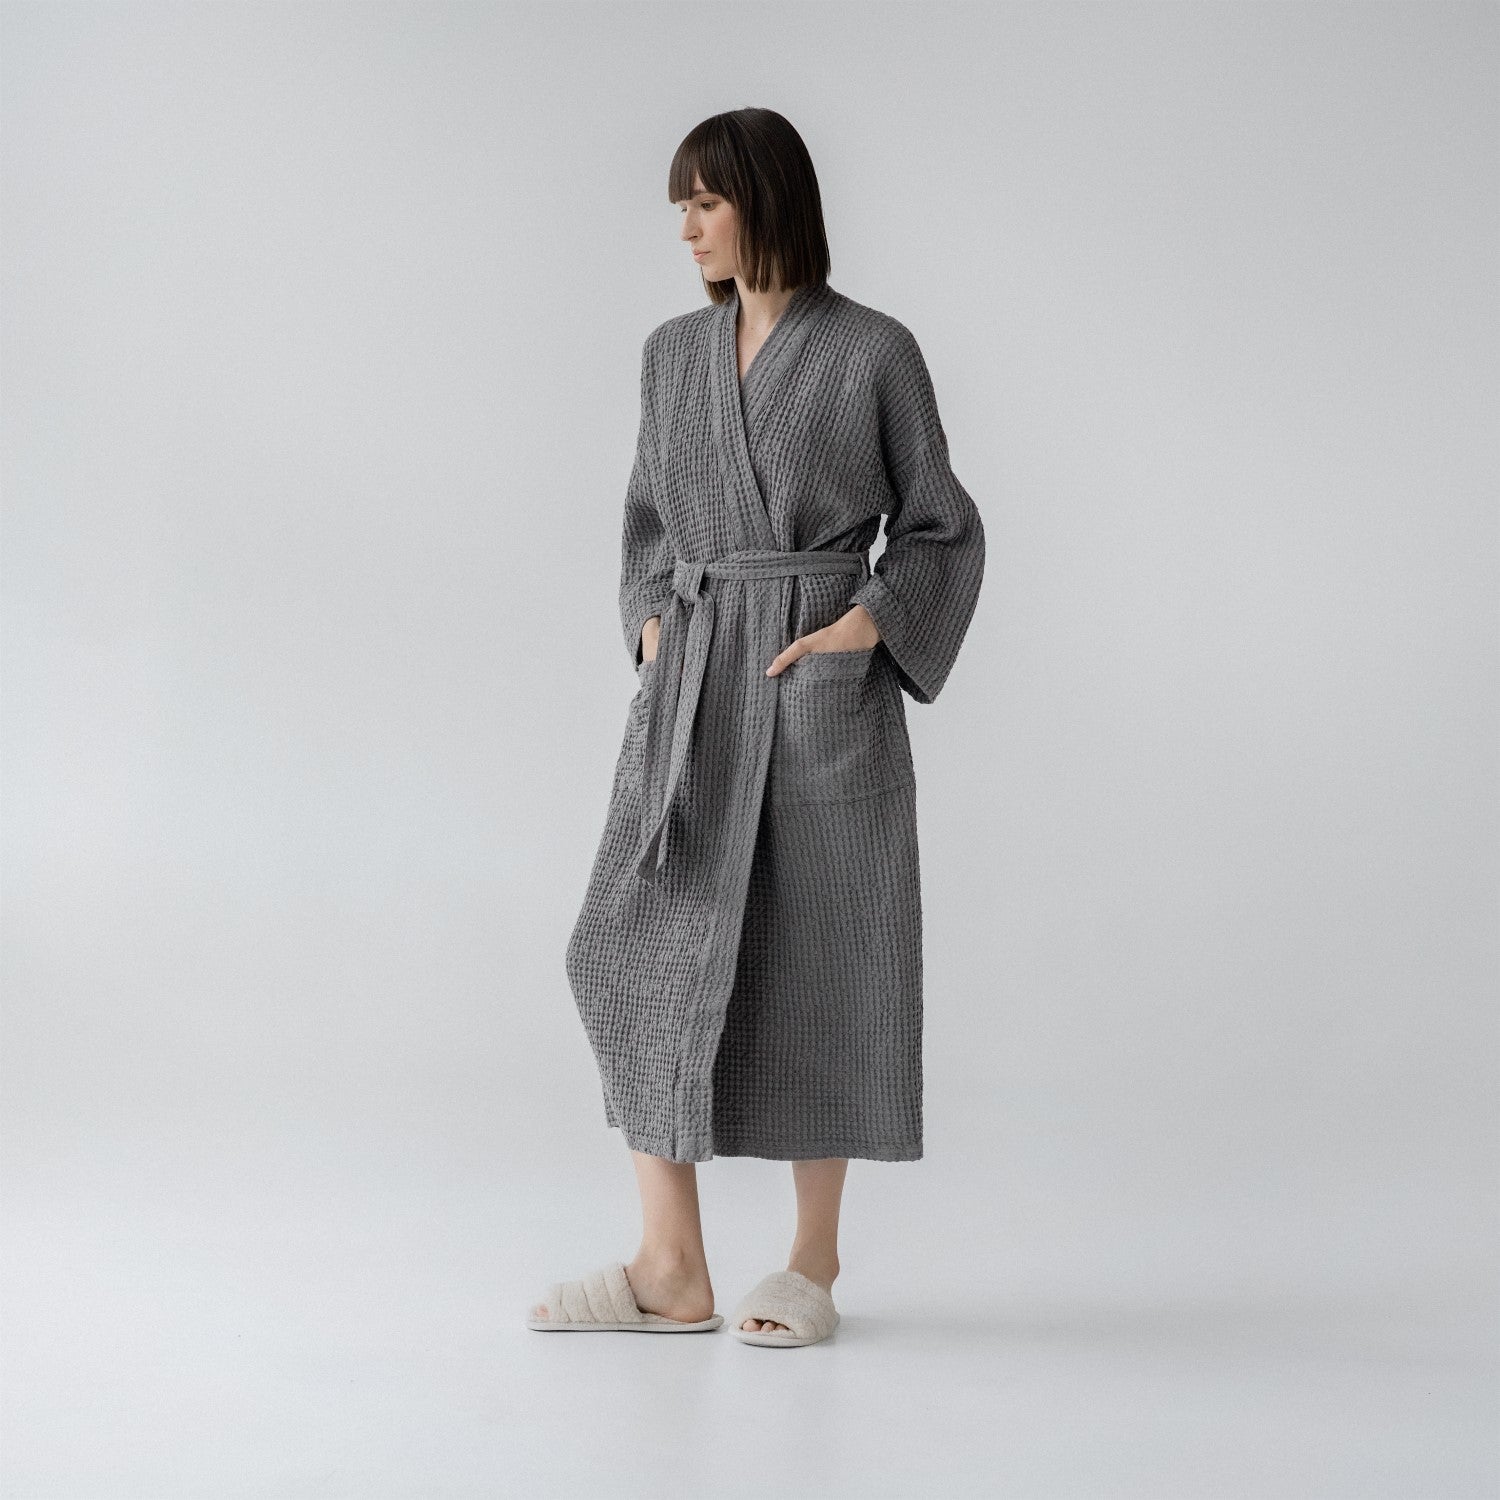 Buy Chelsea Peers Grey Cotton Dressing Gown from Next Belgium